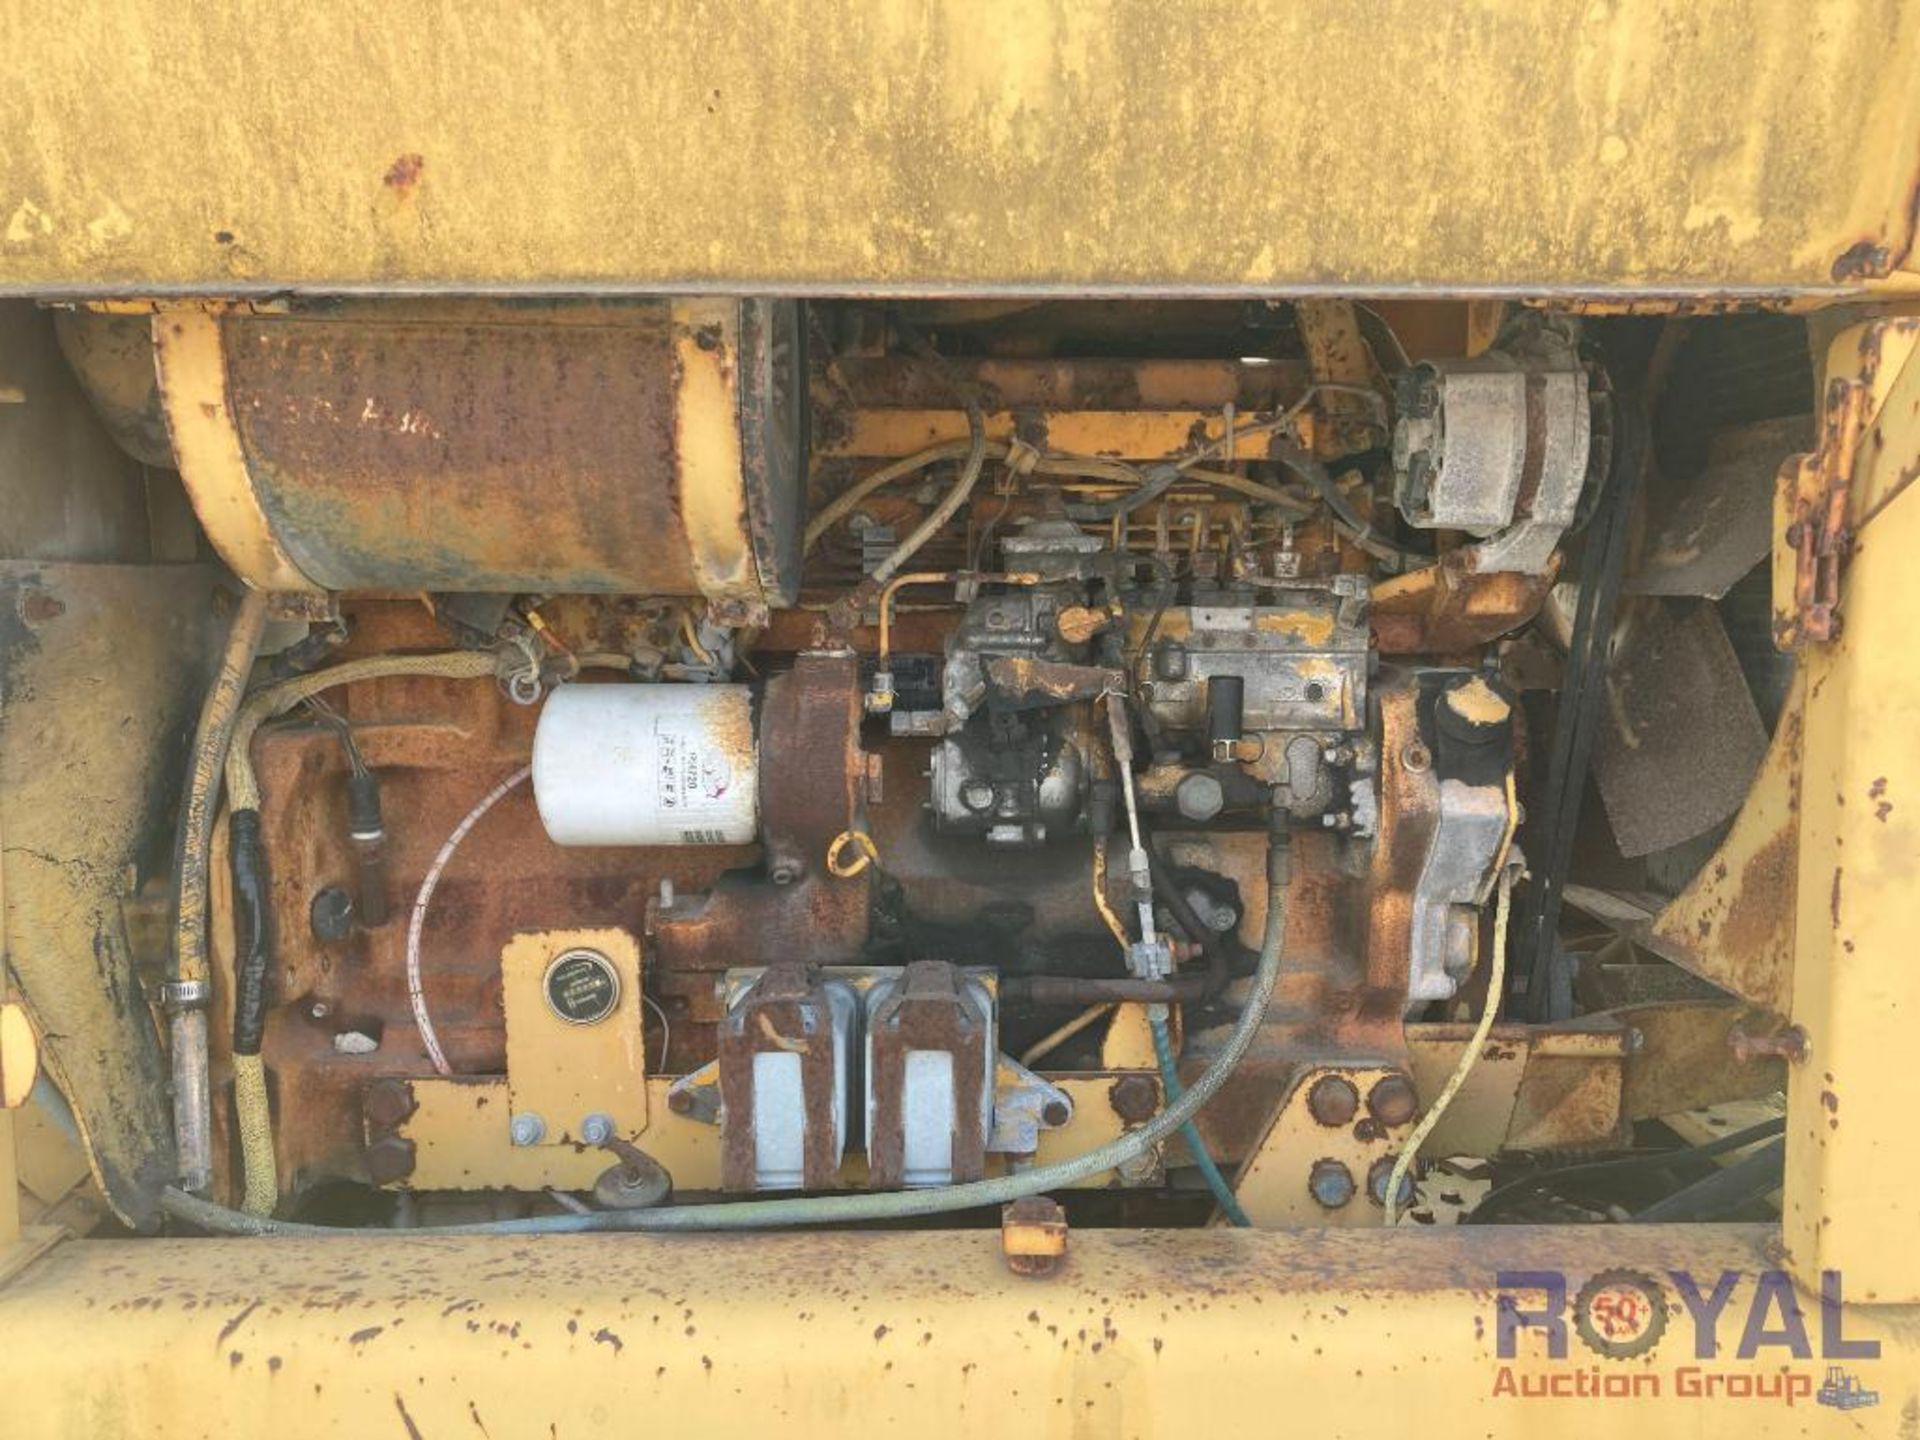 1988 John Deere 772B-H Motor Grader - Image 6 of 29